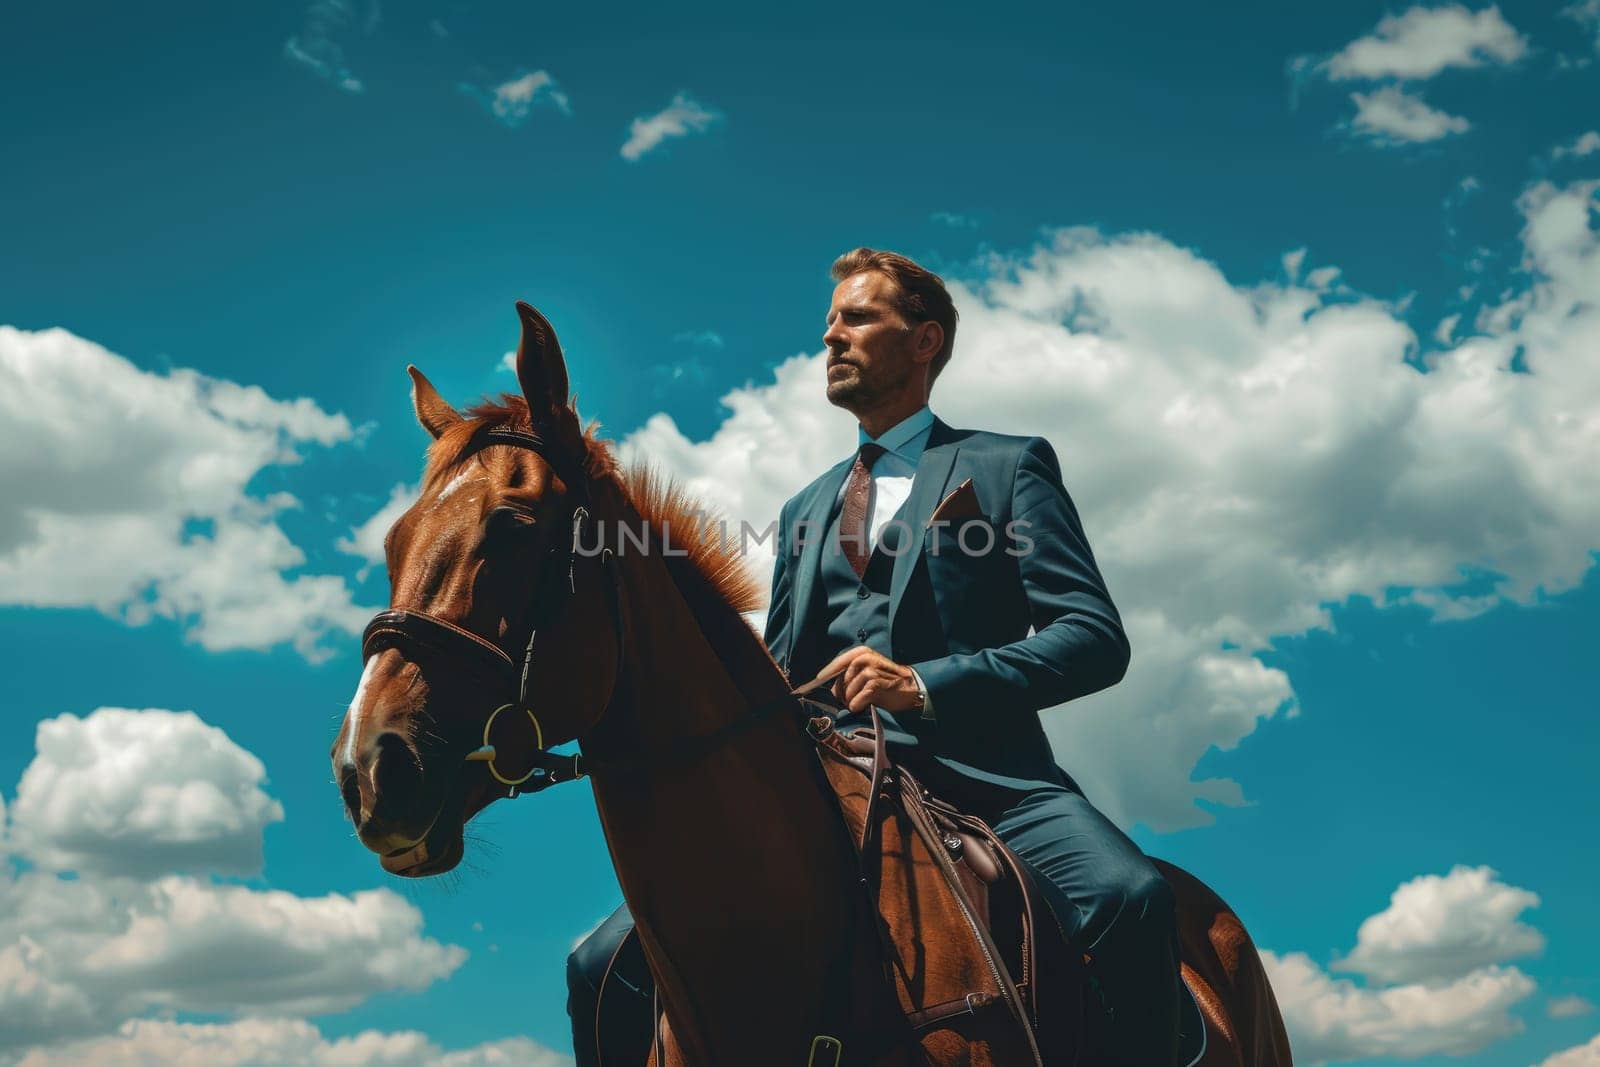 Businessman in suit on horseback, Well dressed man on horseback.